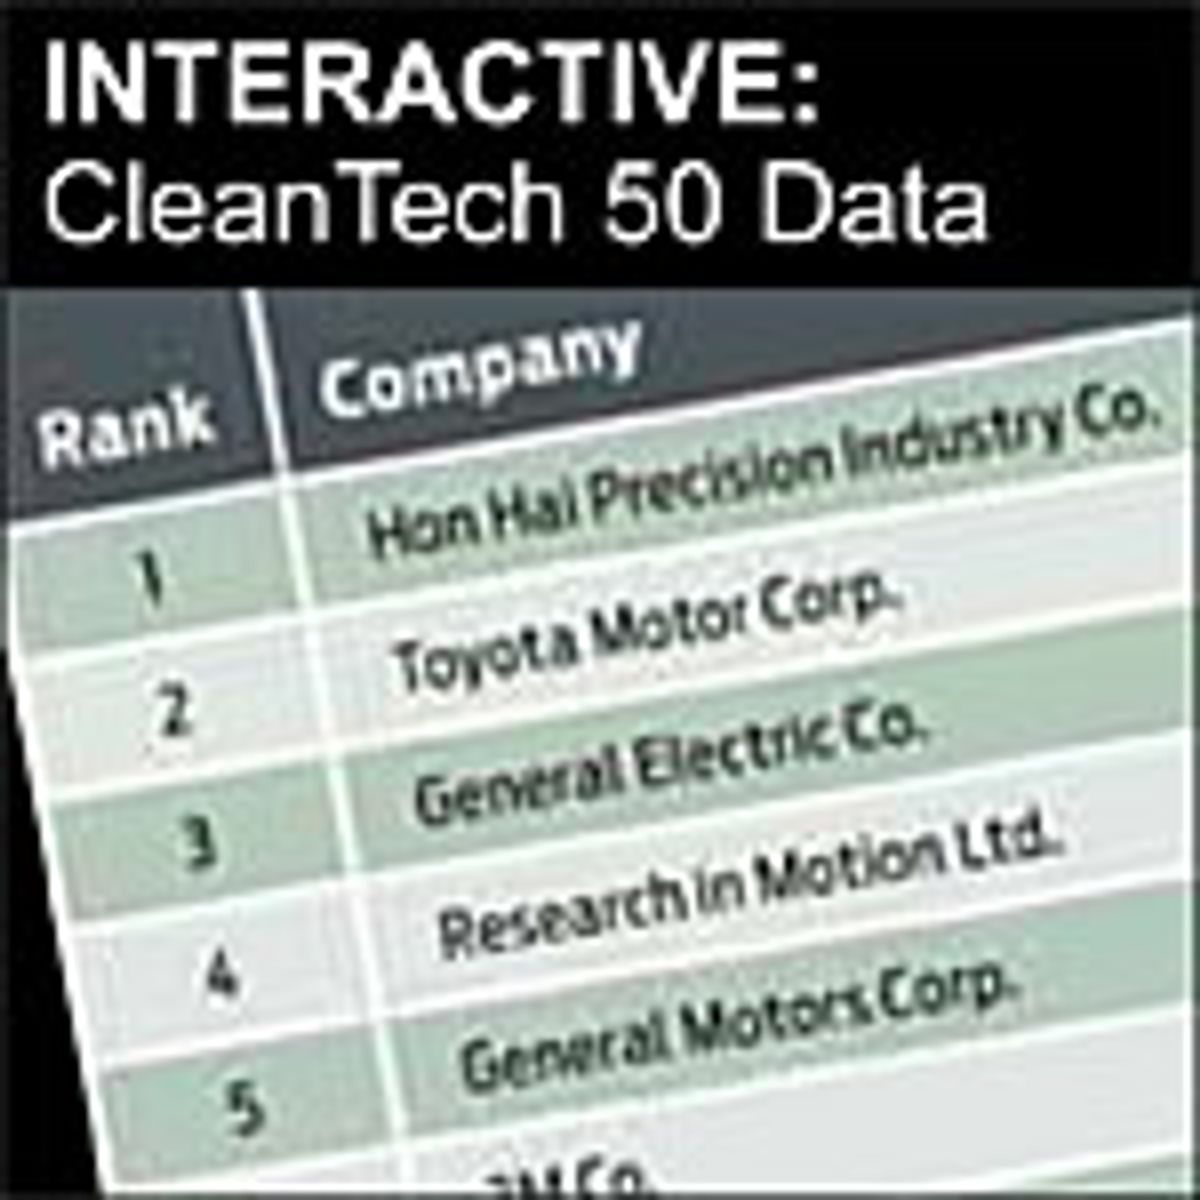 The Clean Tech 50